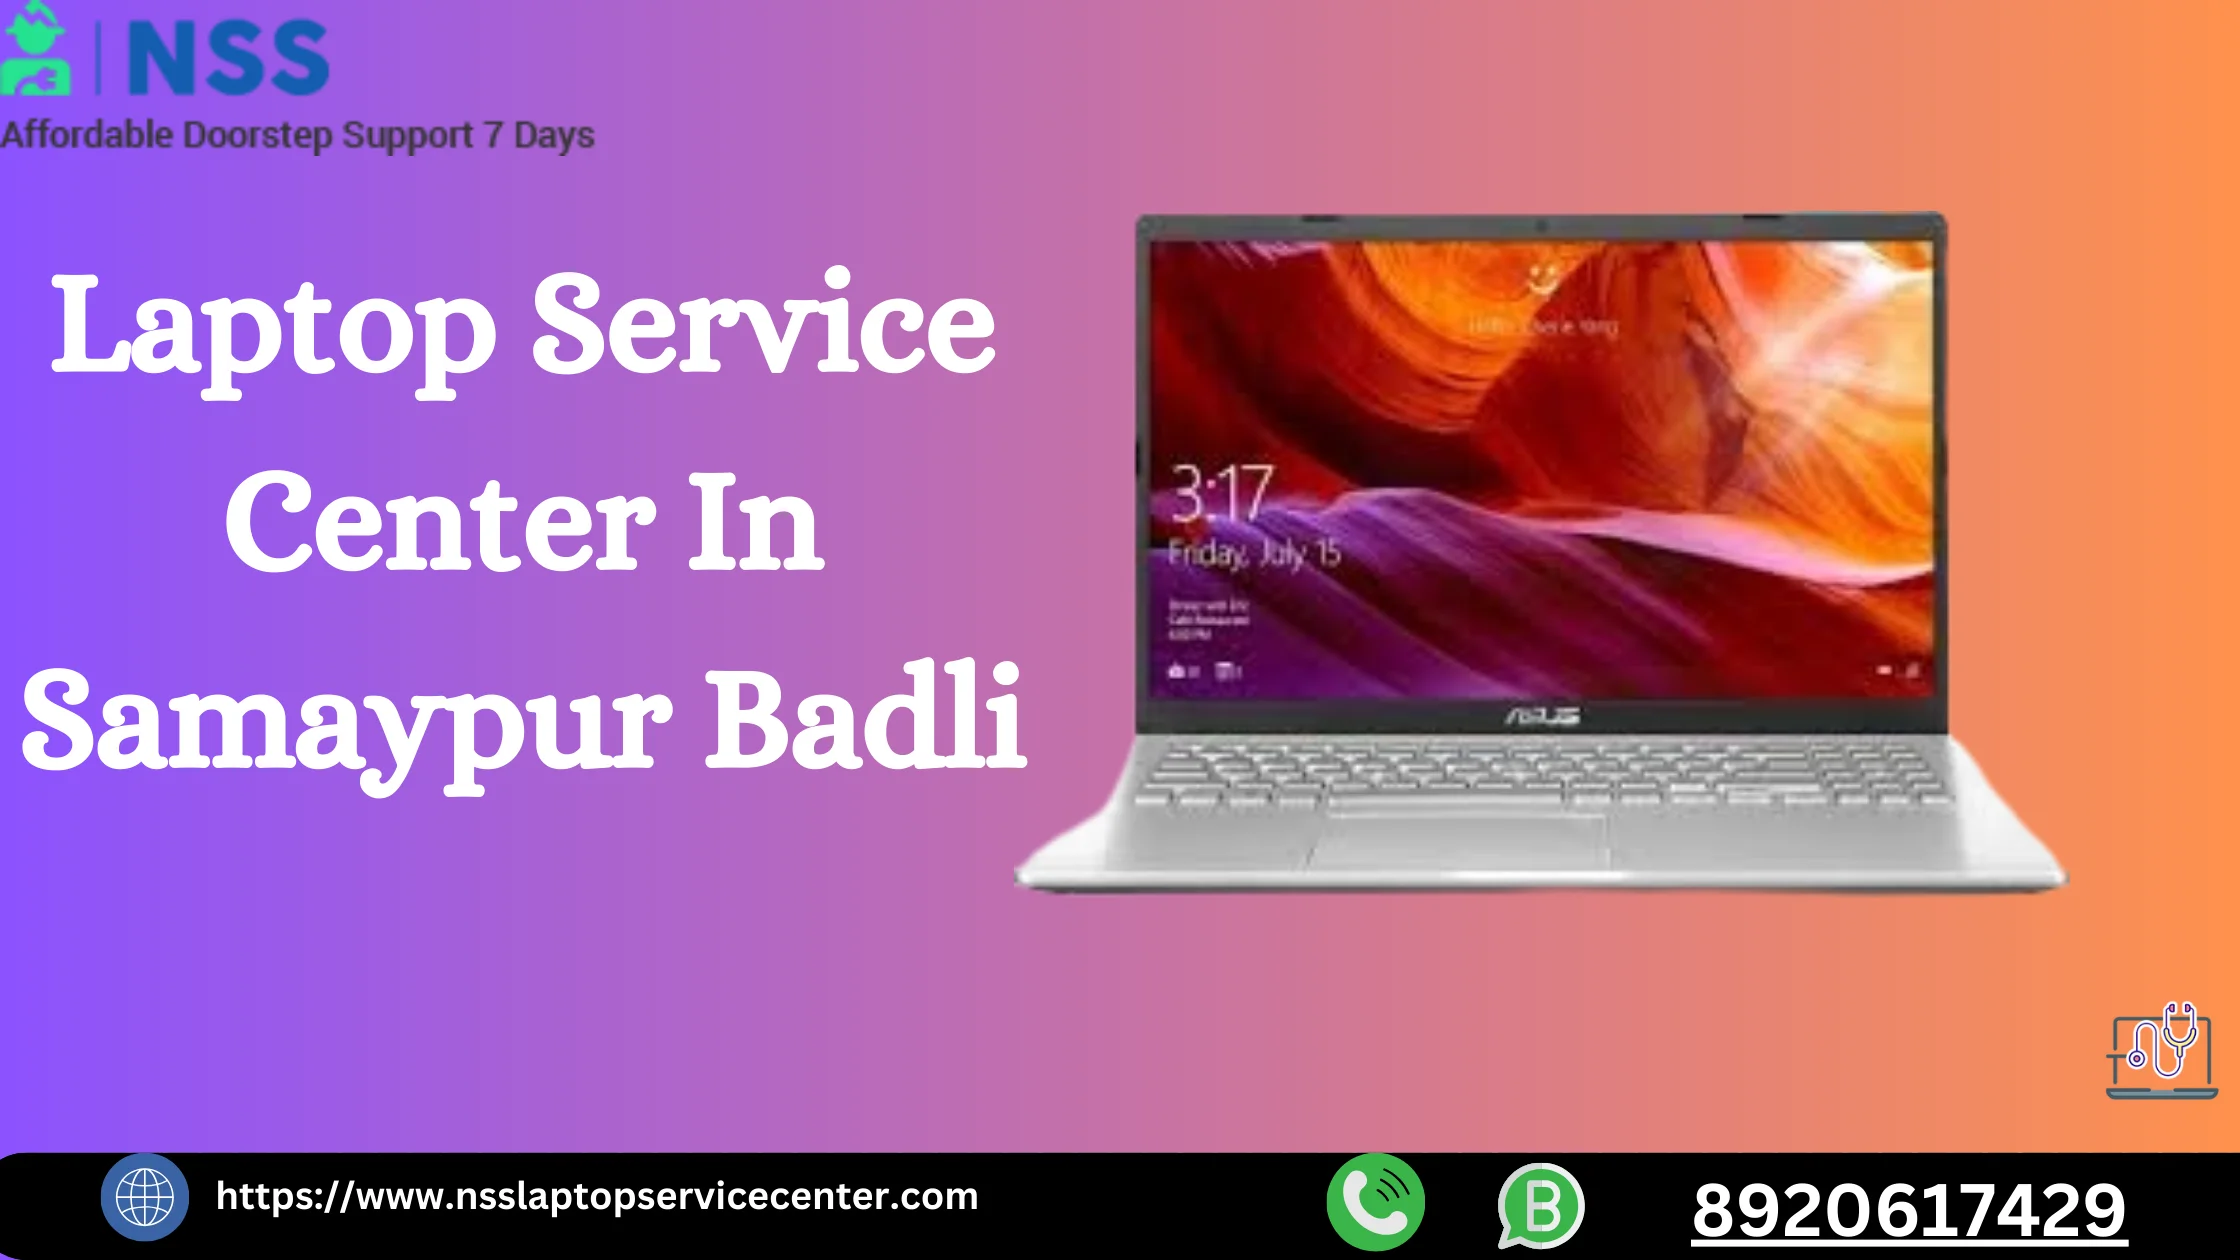 Asus Laptop Service Center in Samaypur Badli Near Delhi